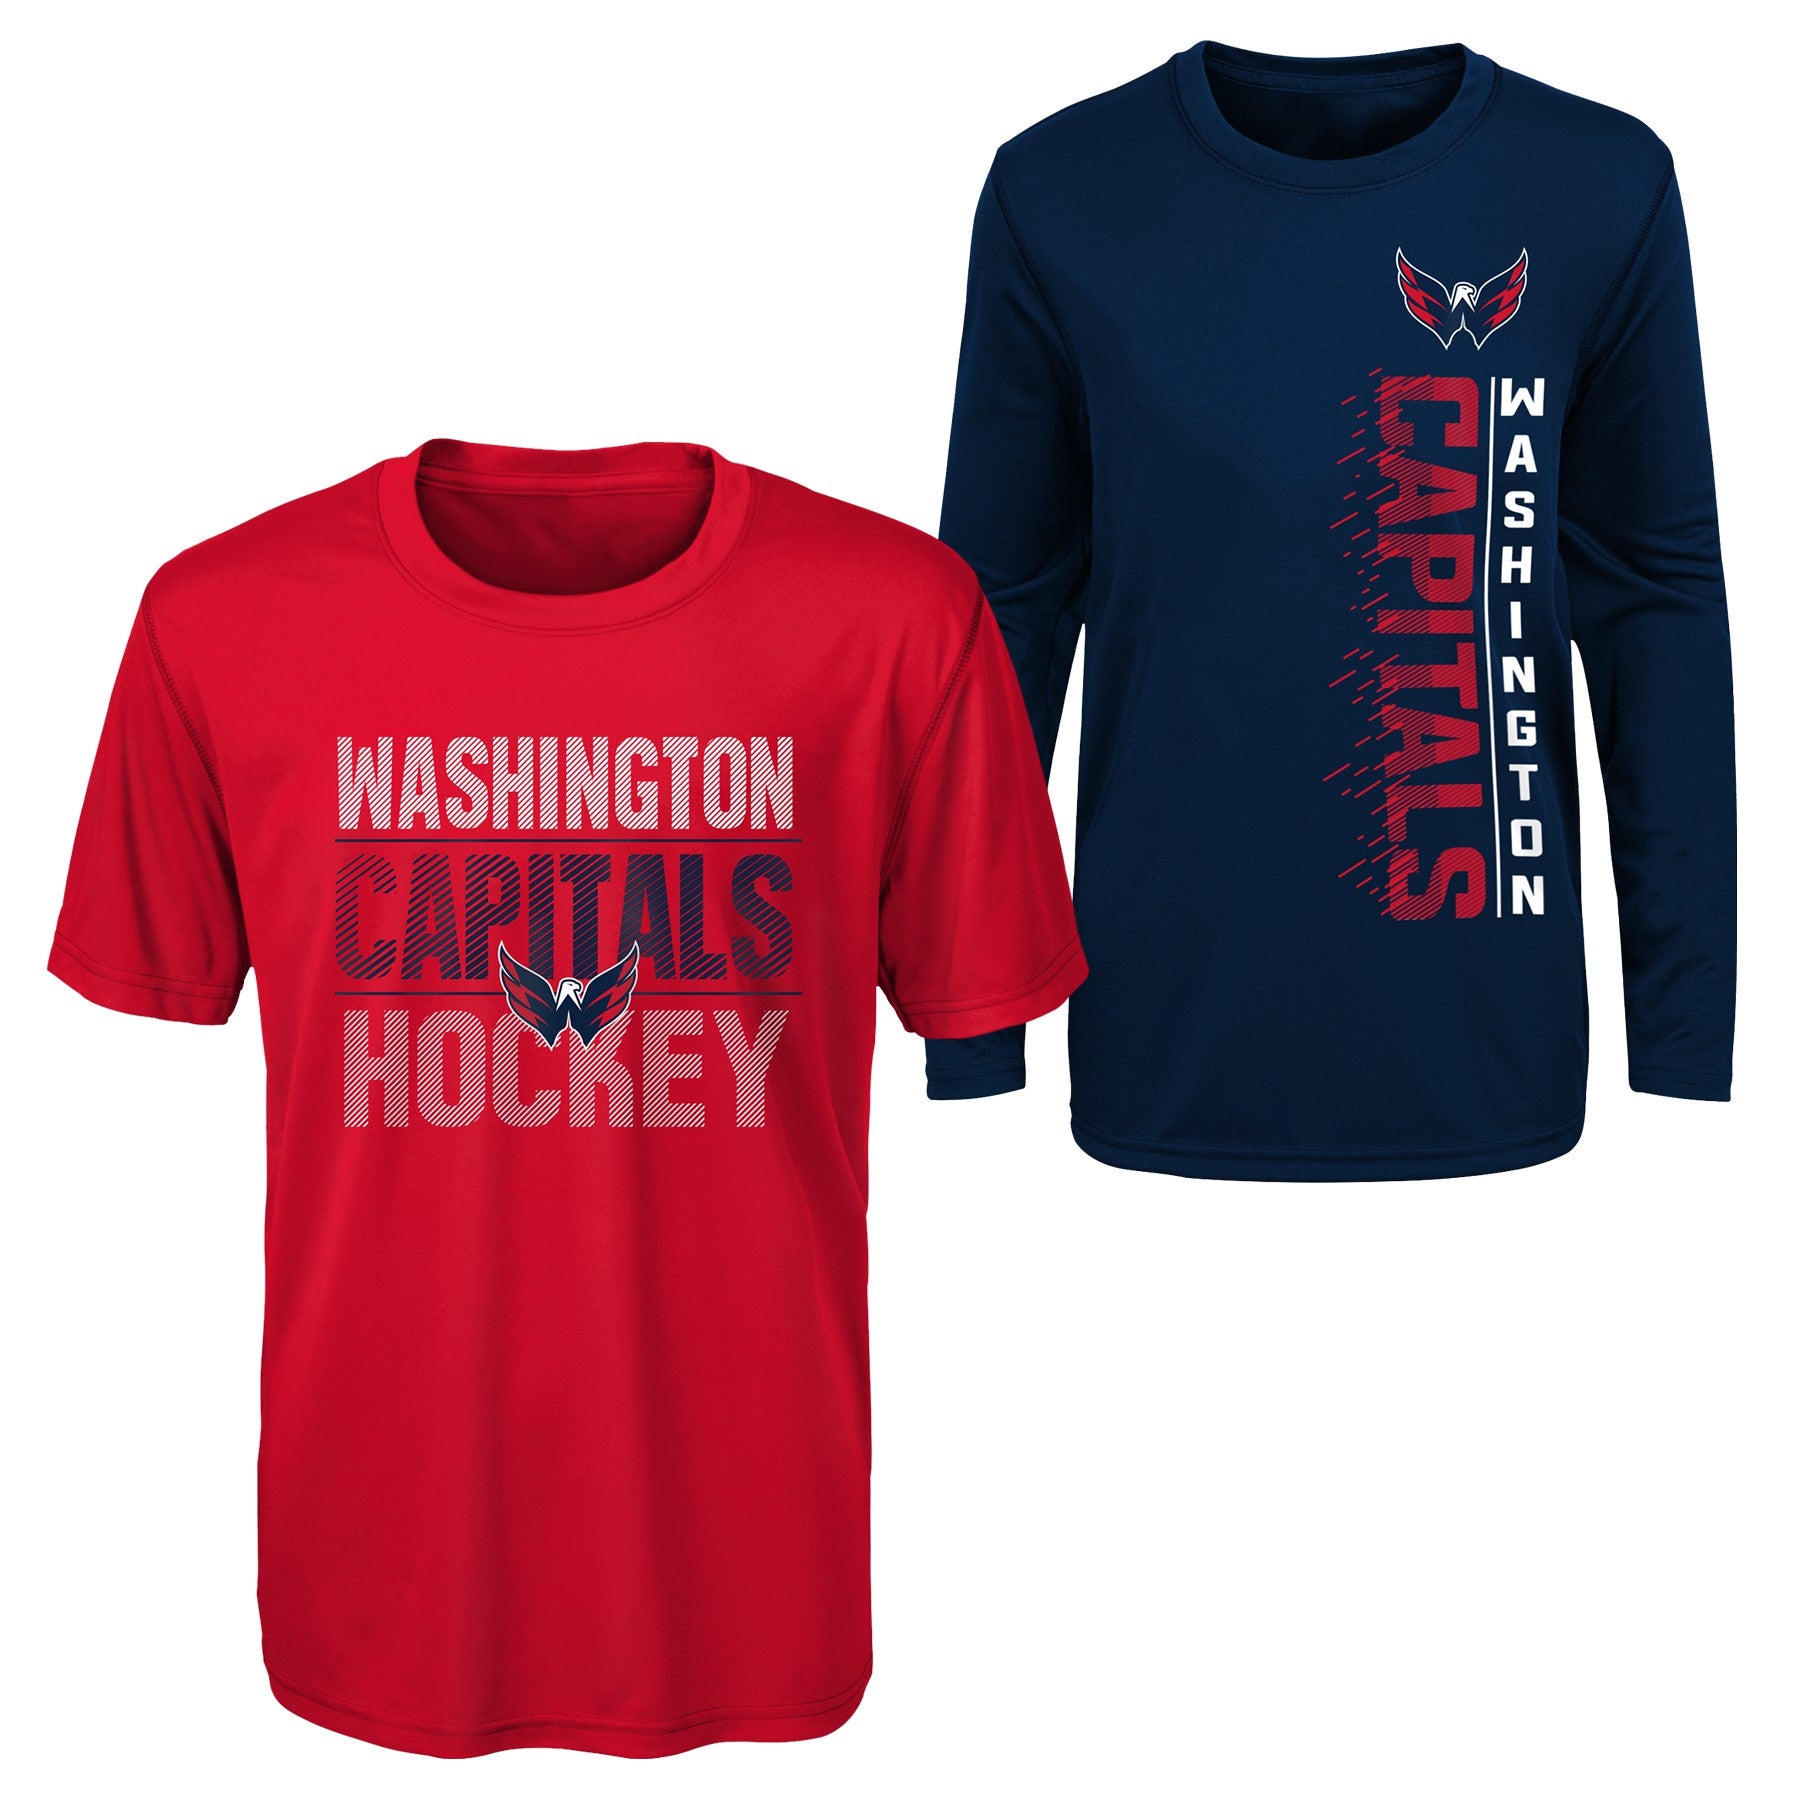 Washington Capitals, Shirts